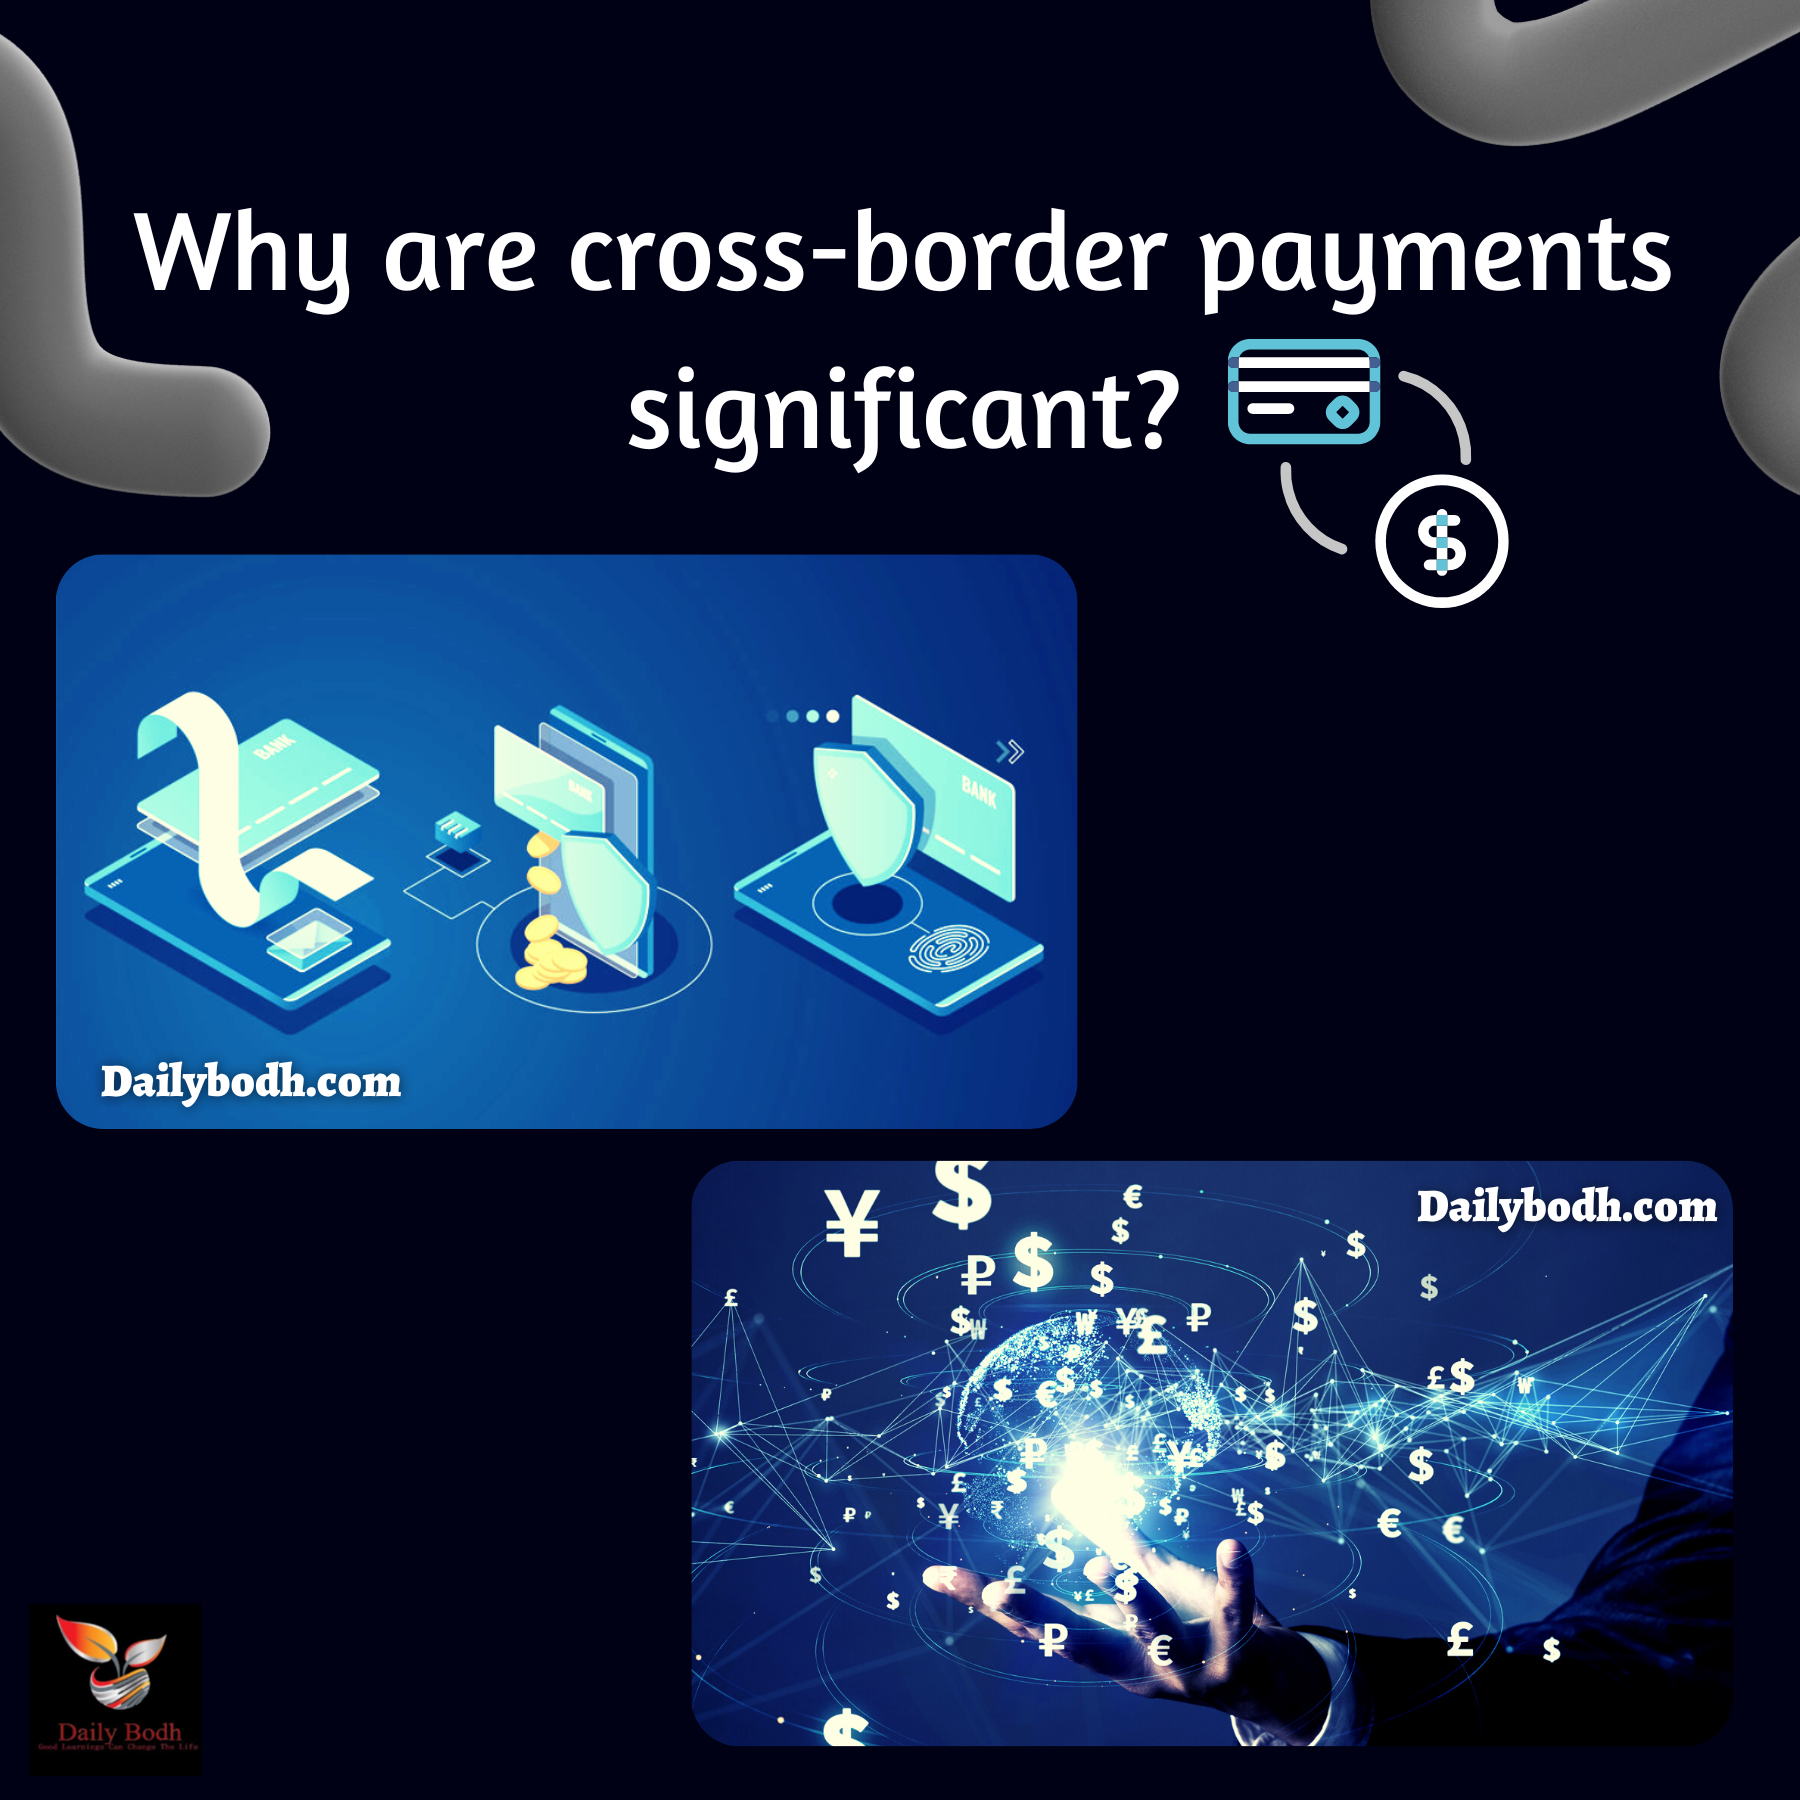 Cross Border Payments